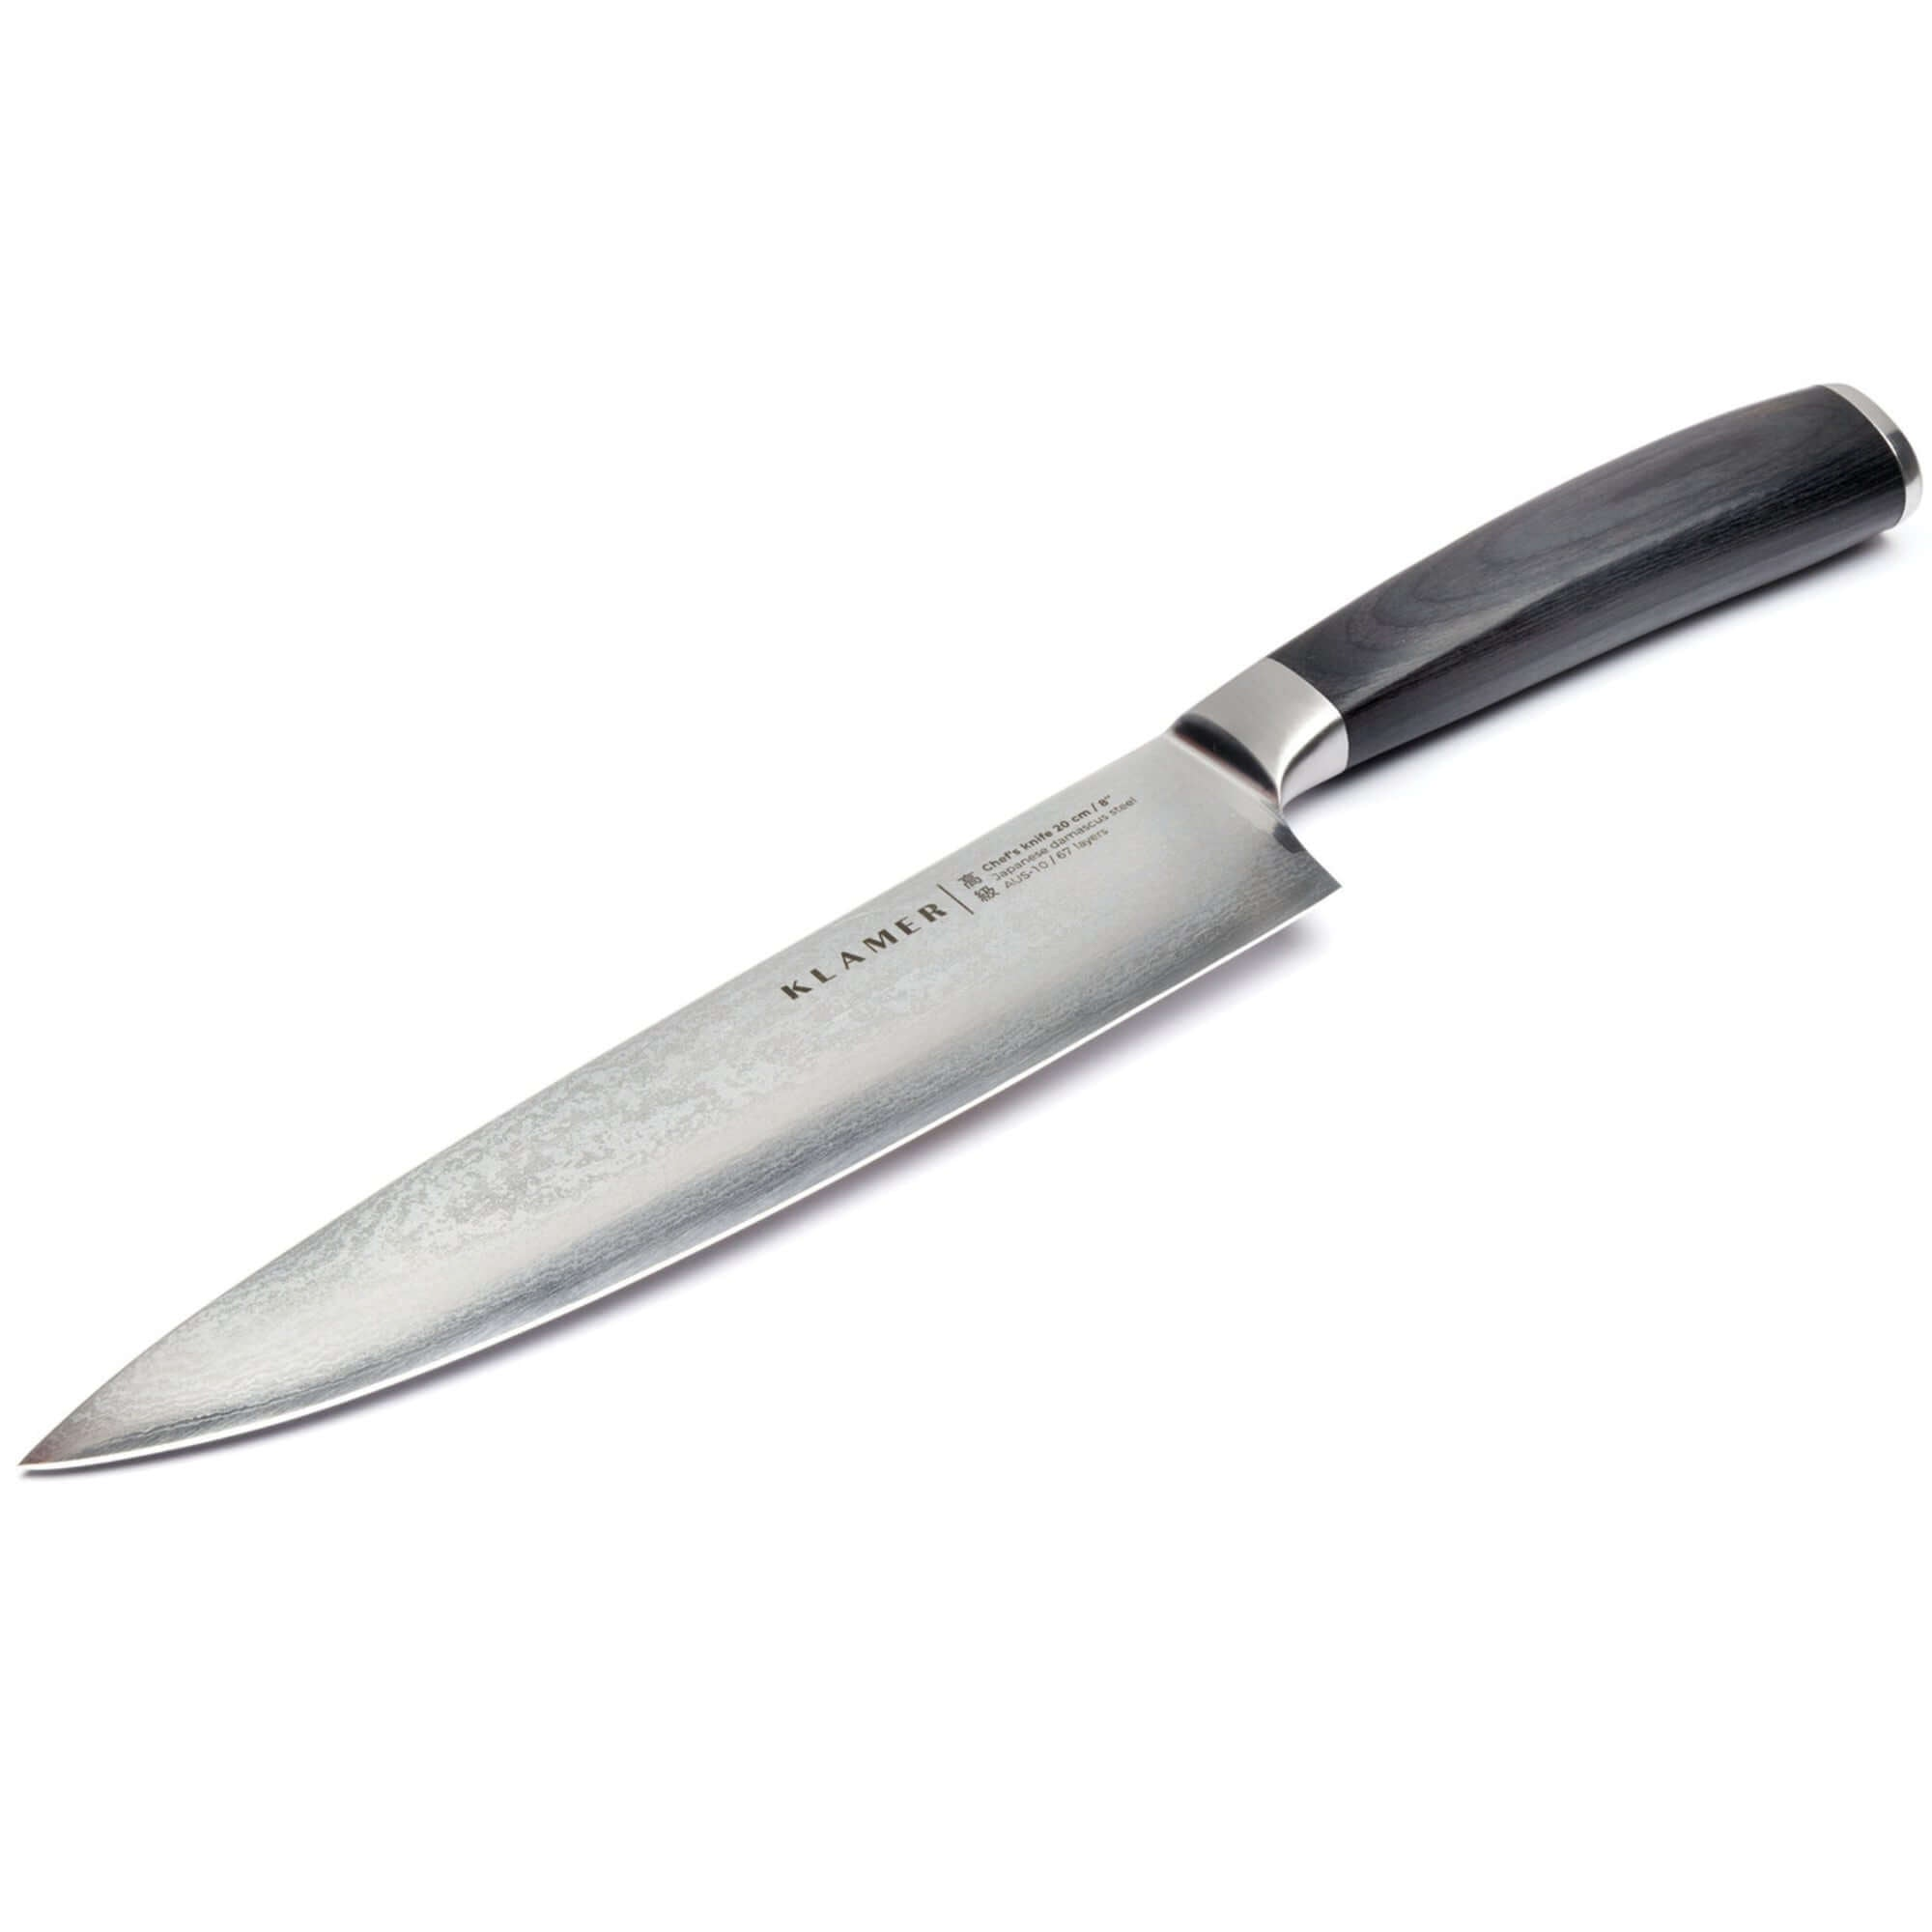 KLAMER Damast Chefmesser Messer 20cm